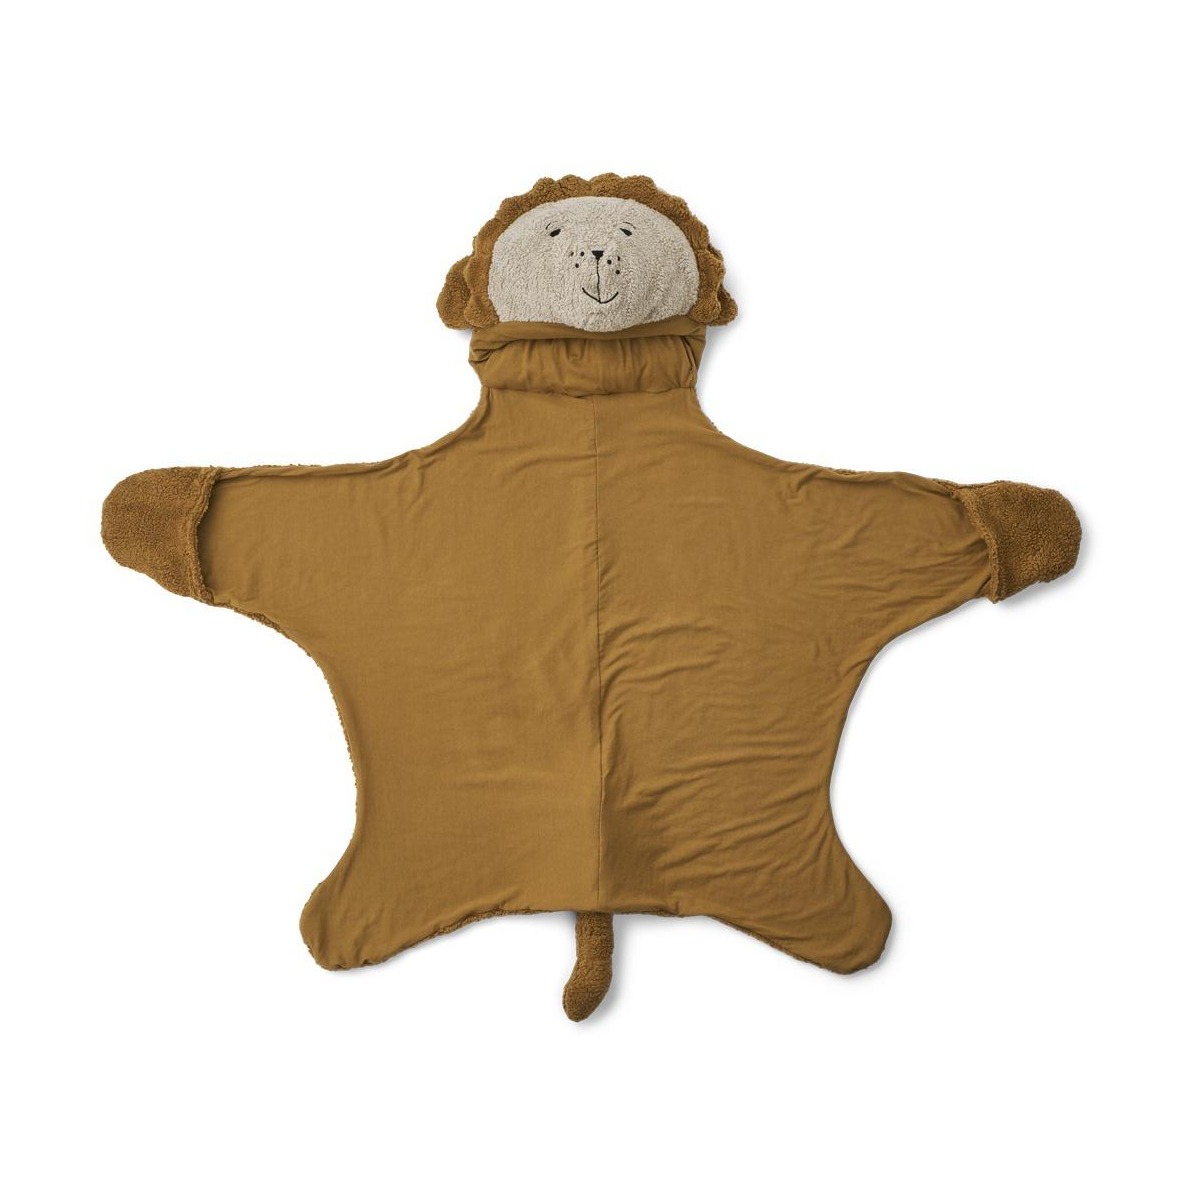 Capa de disfraz para niños Lion Golden caramel de Liewood. Disfraces  infantiles